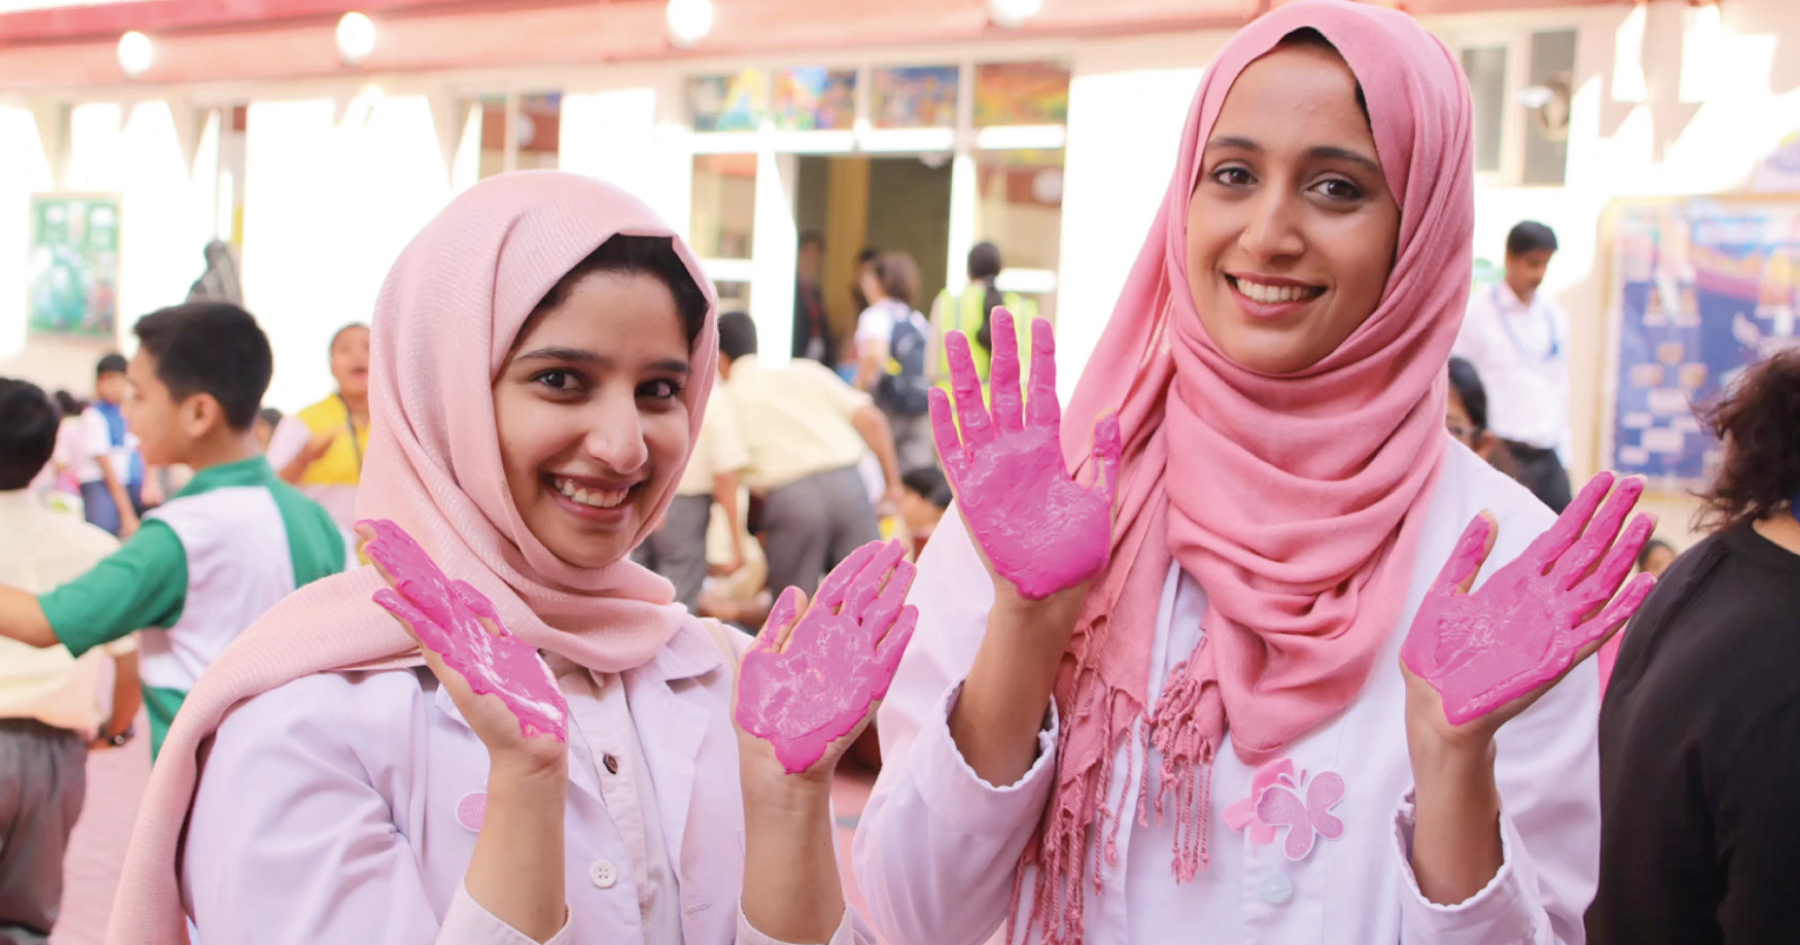 #PINKtober Spreads Hope Across the UAE